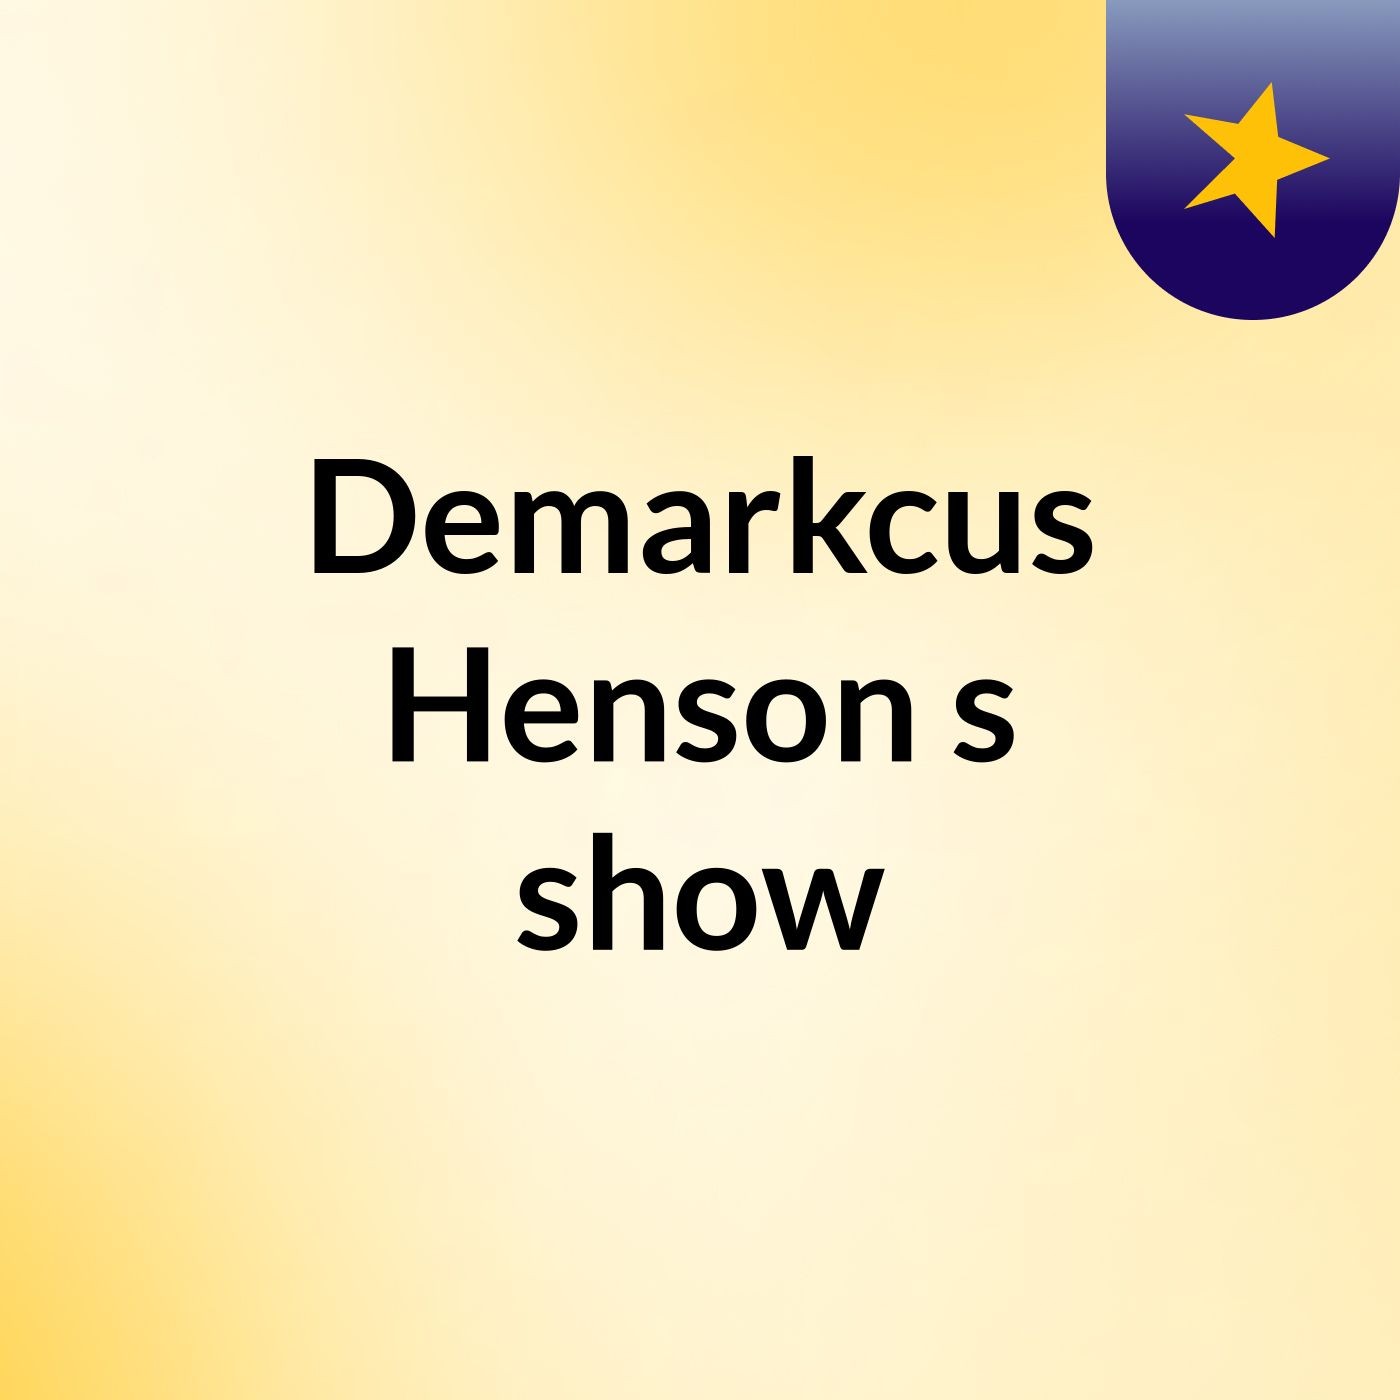 Episode 2 - Demarkcus Henson's show